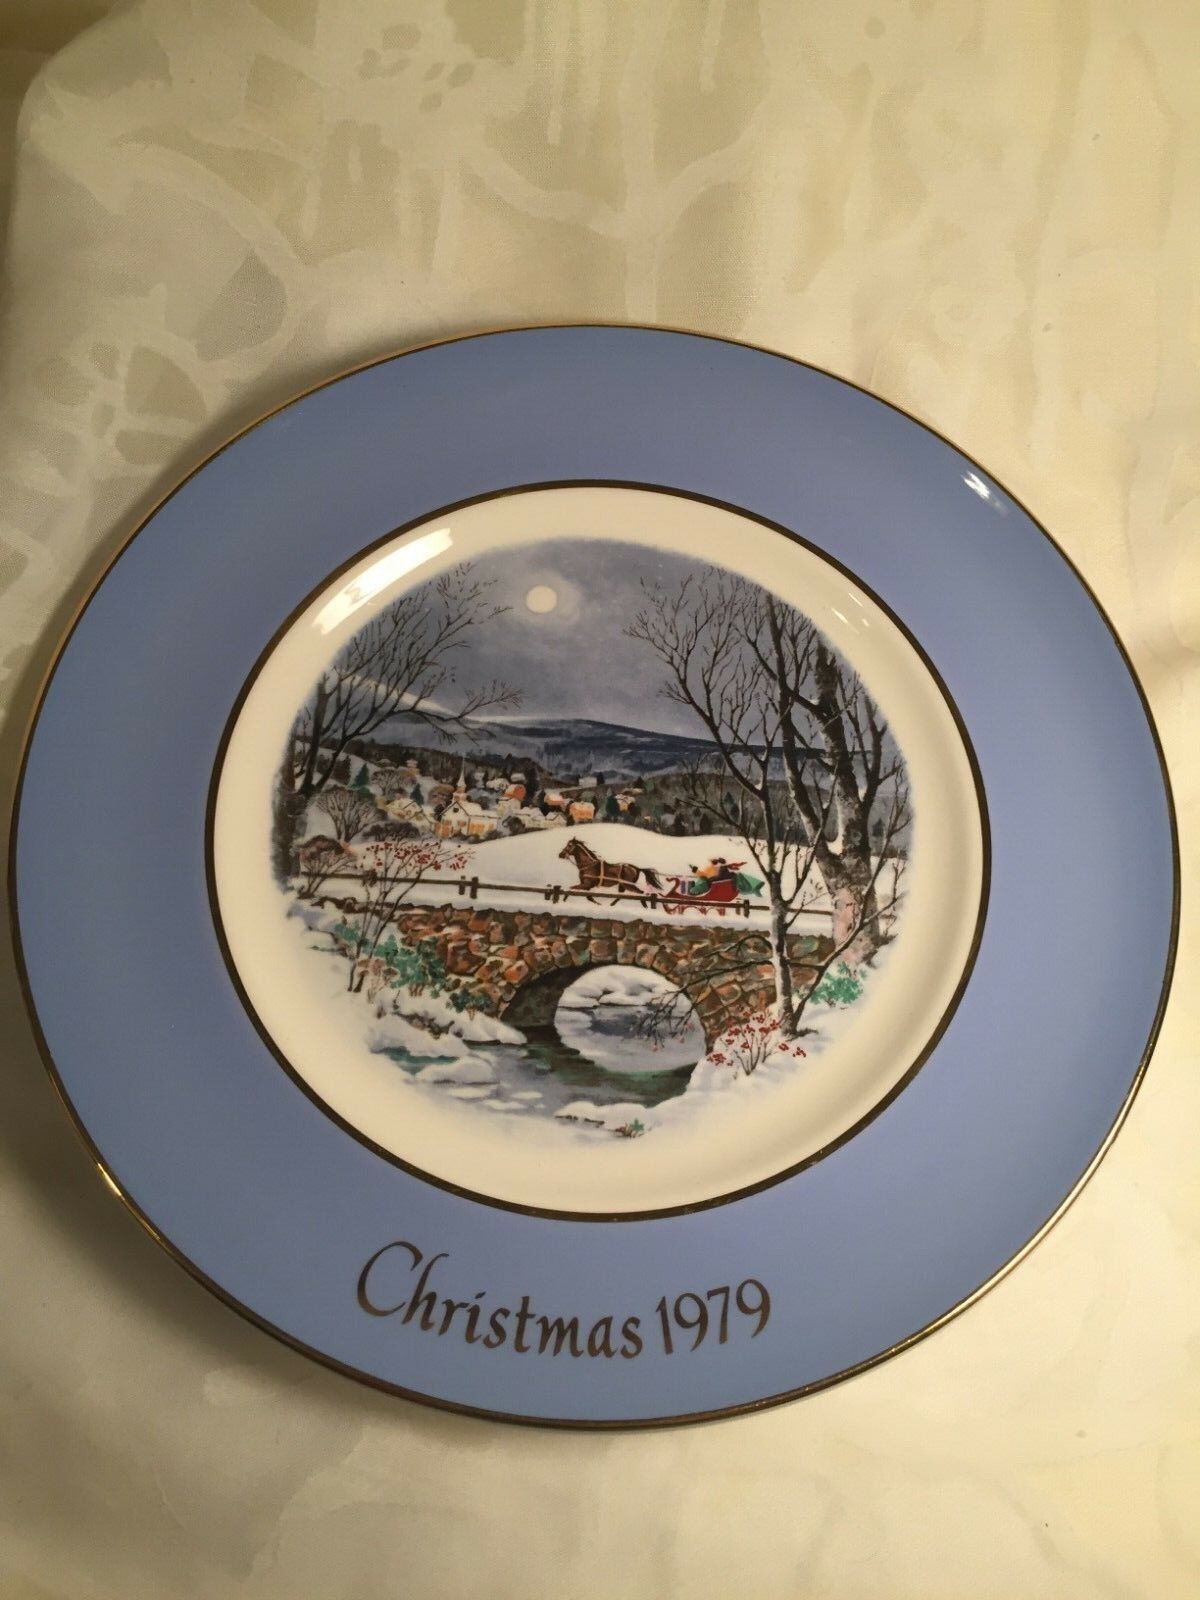 AVON Dashing Through the Snow 1979 Christmas Plate Series Seventh Edition 